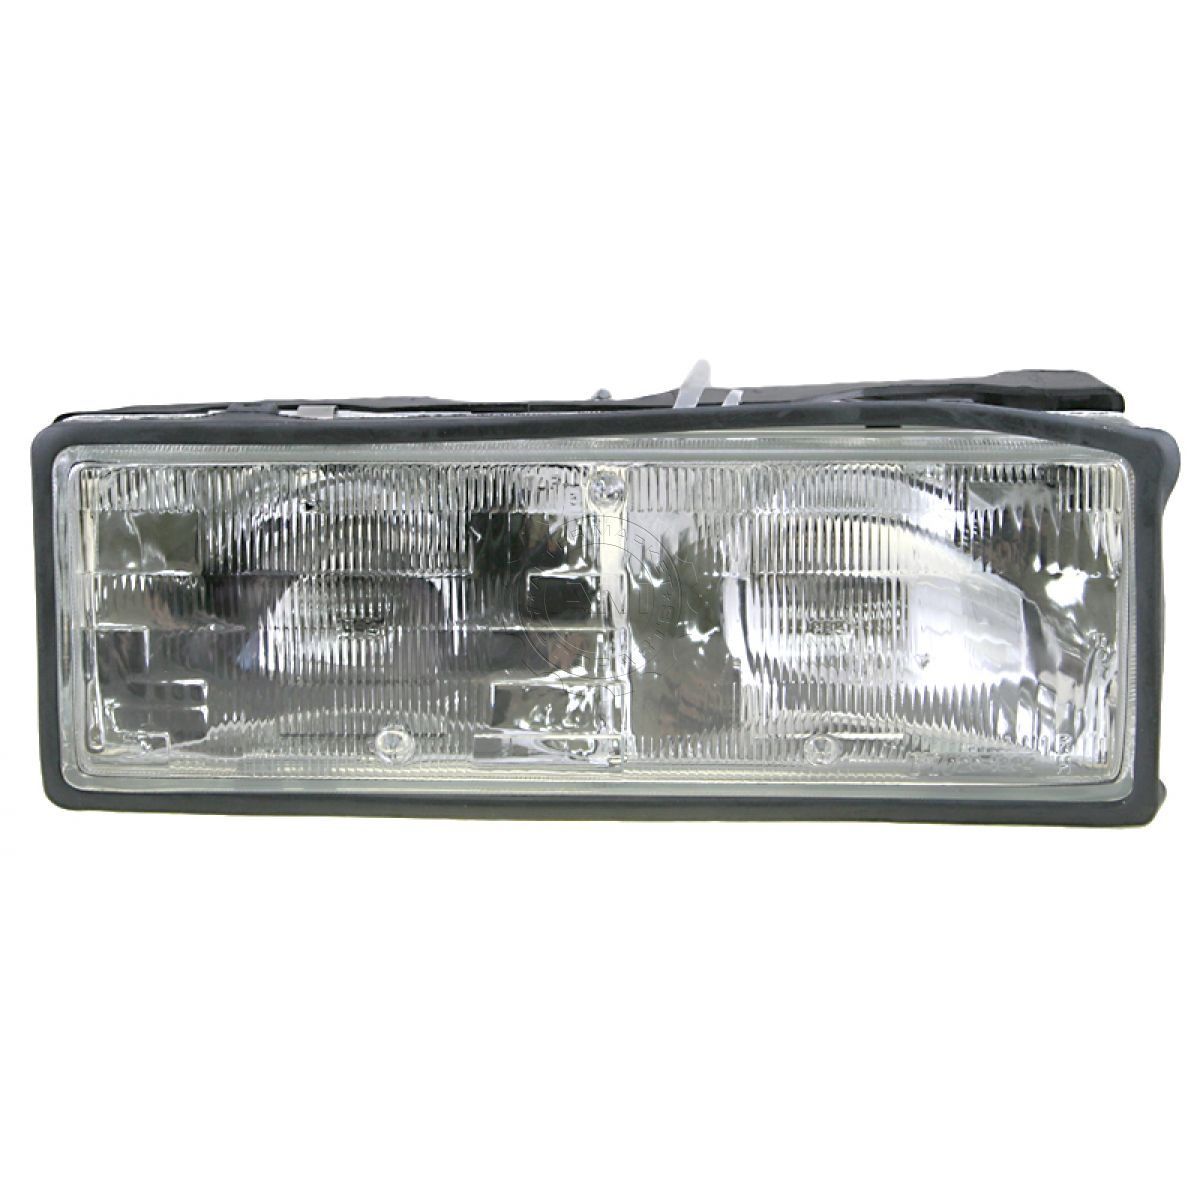 Chevy Caprice Impala  Headlight Headlamp Head Light Lamp Right Passenger Side RH